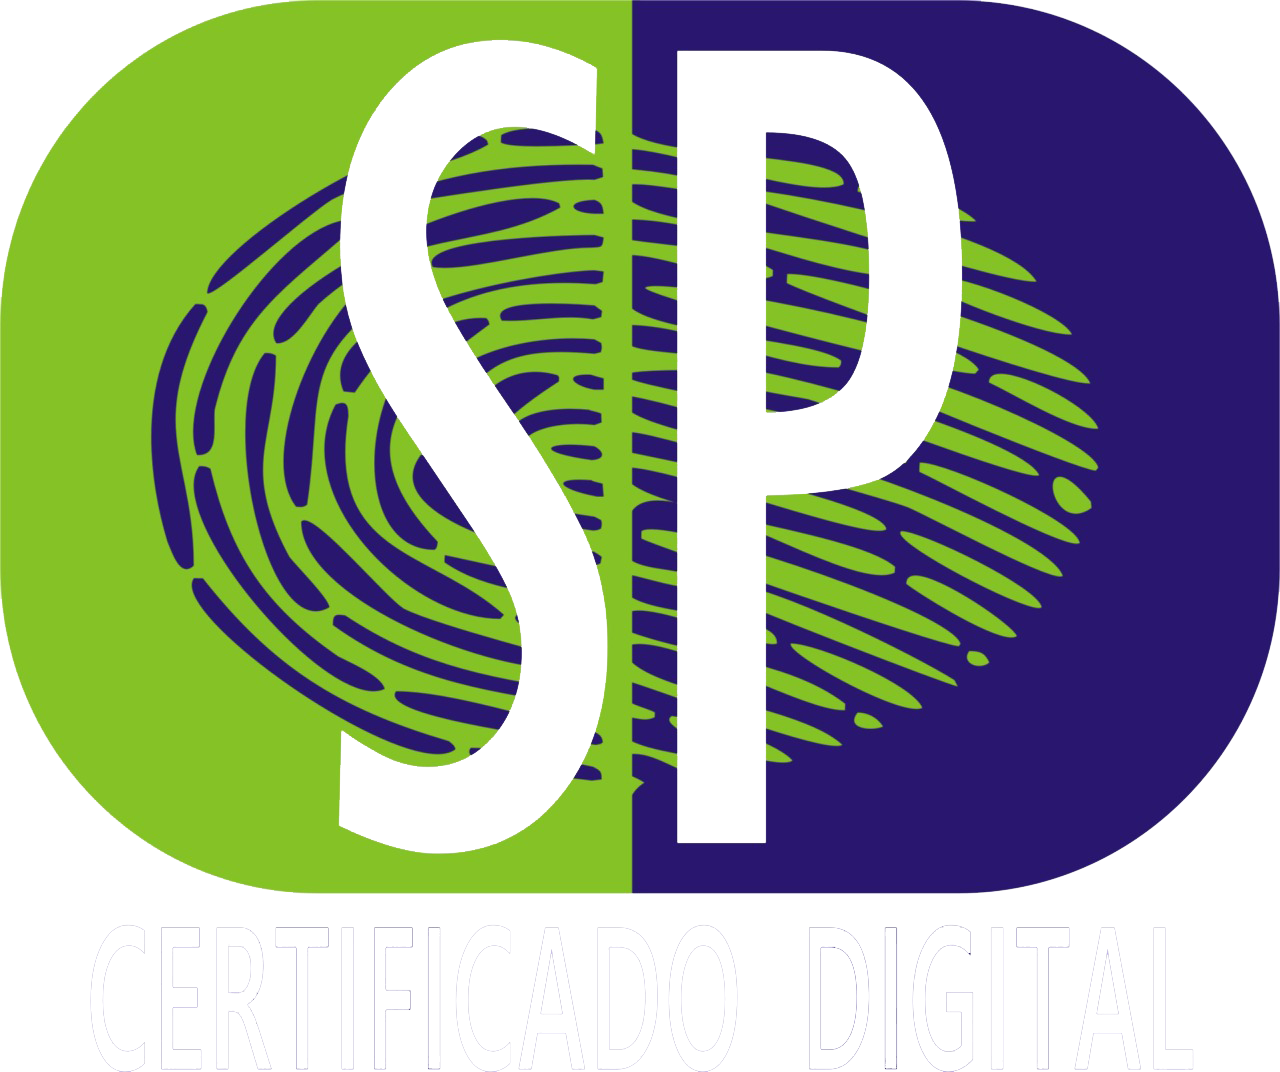 SP Certificado Digital | Emita via VídeoConferência